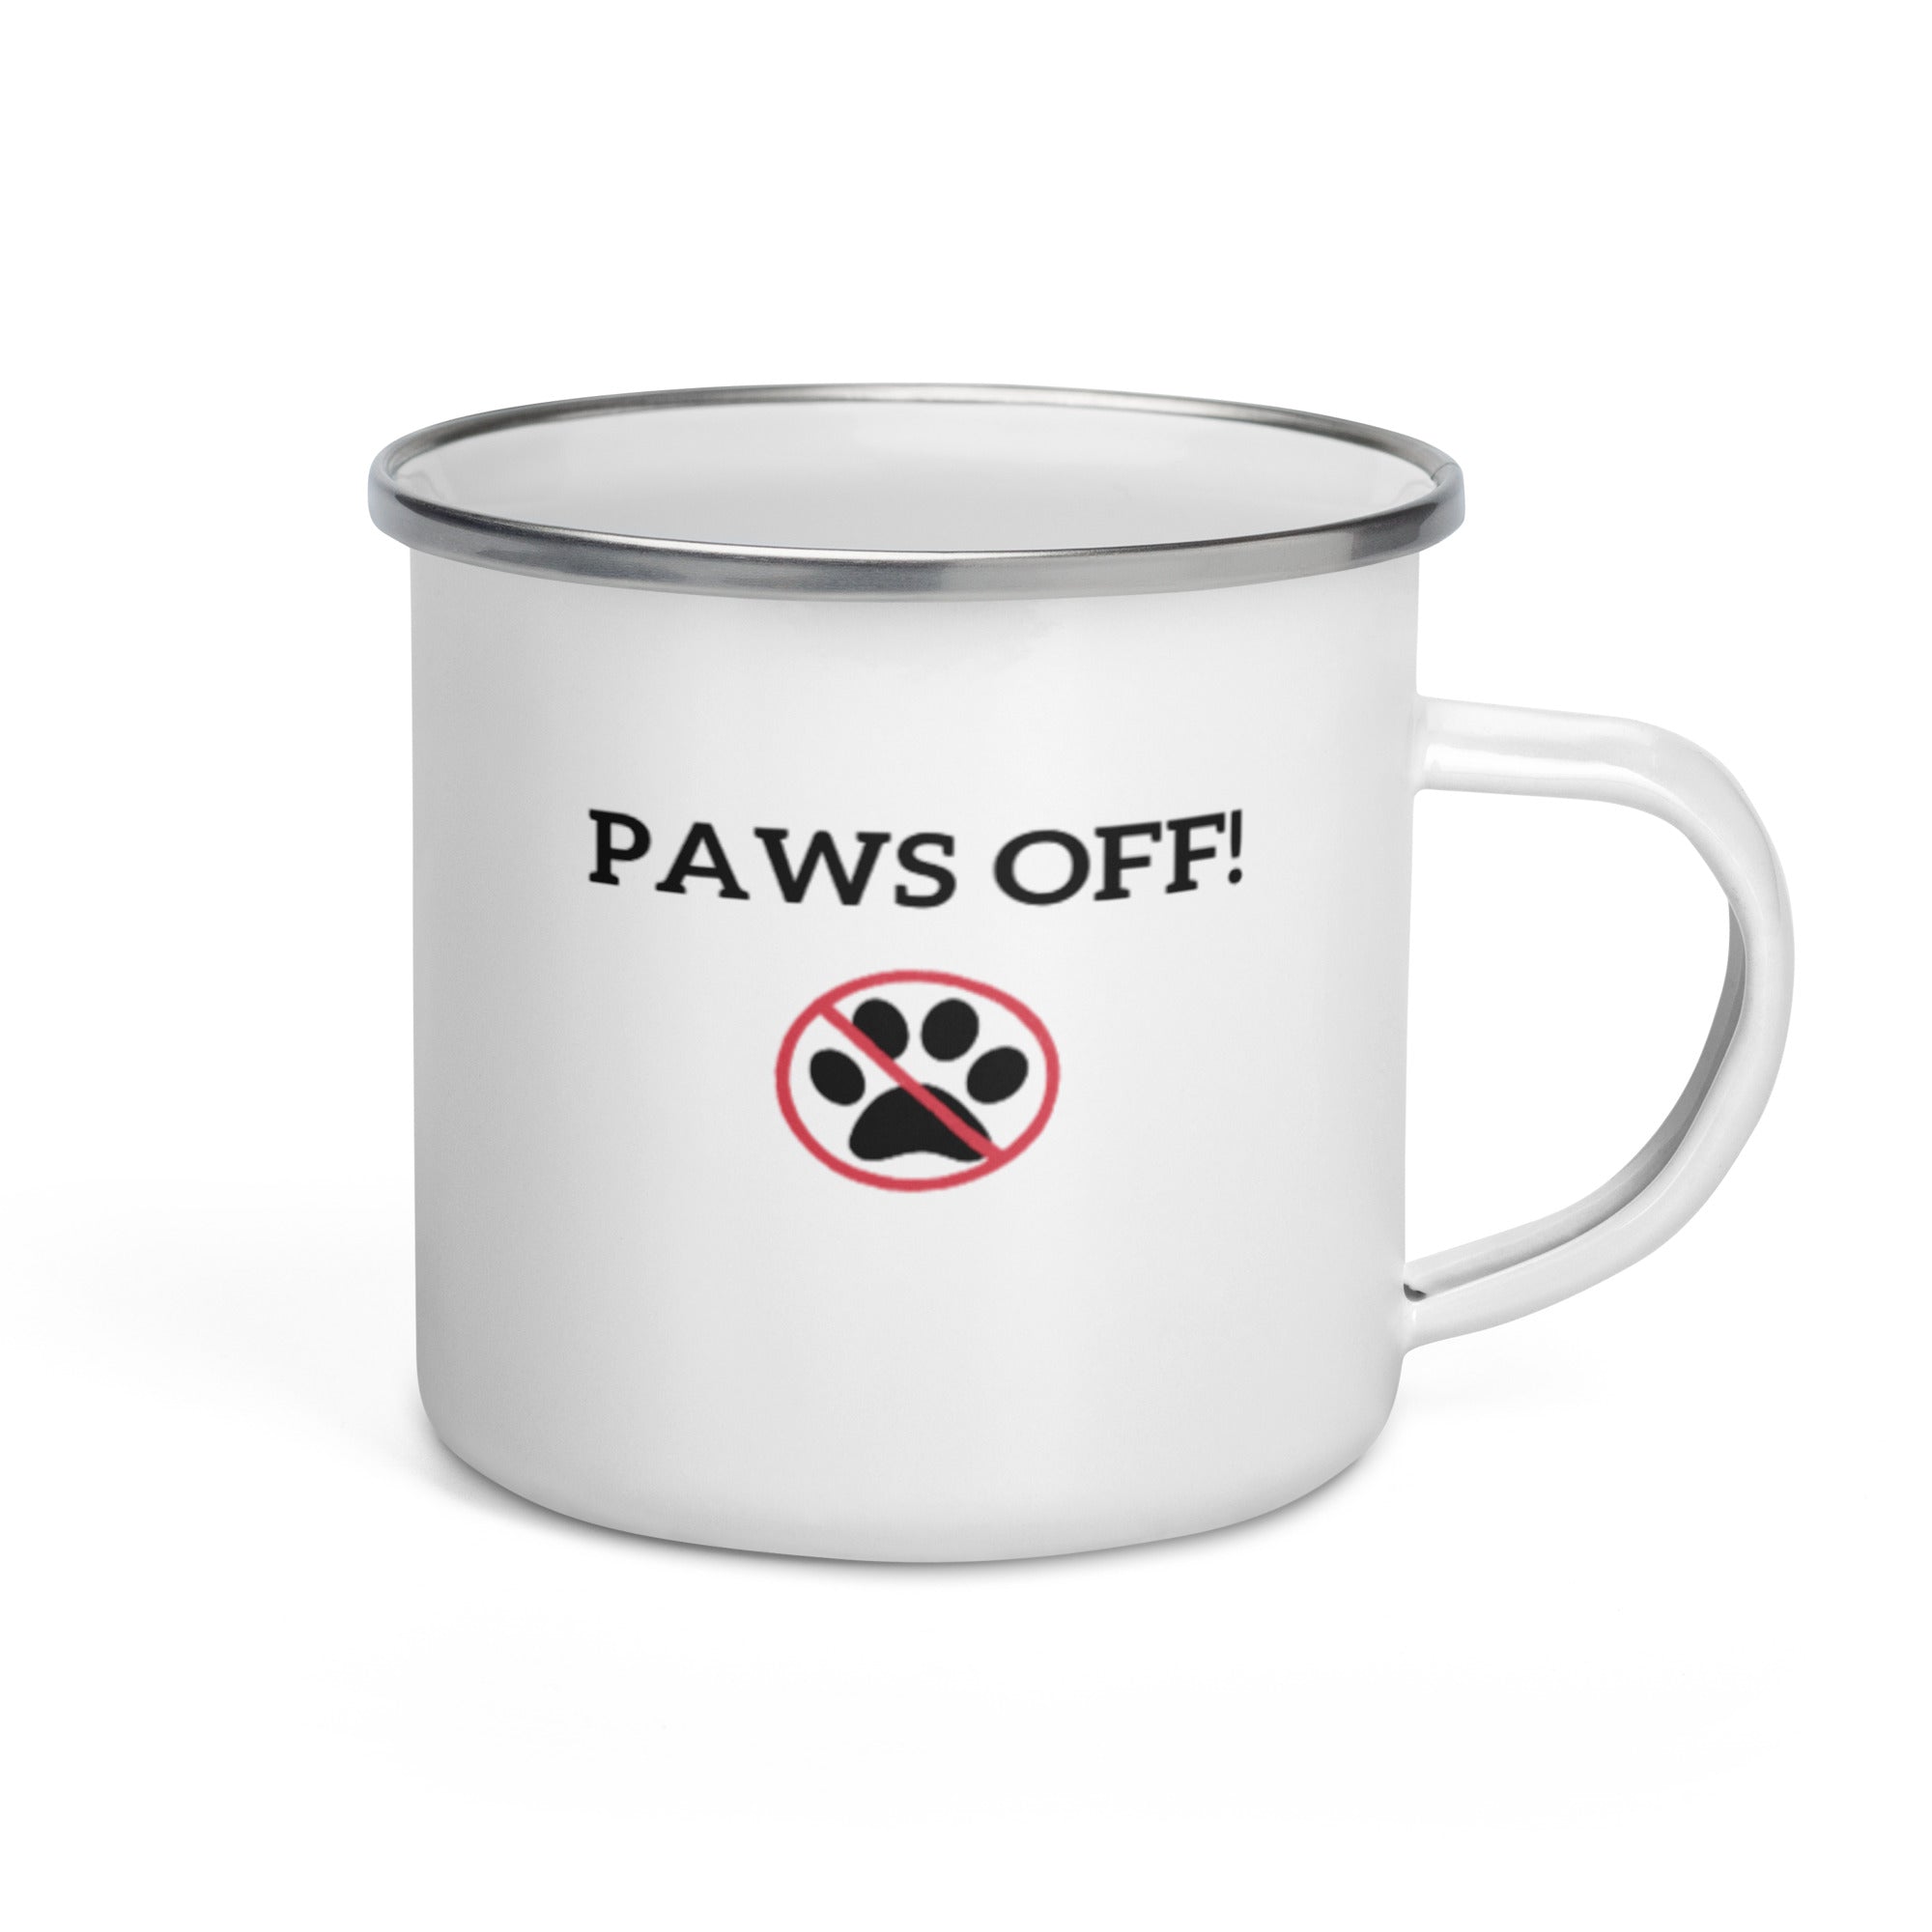 "Paws Off" Enamel Mug